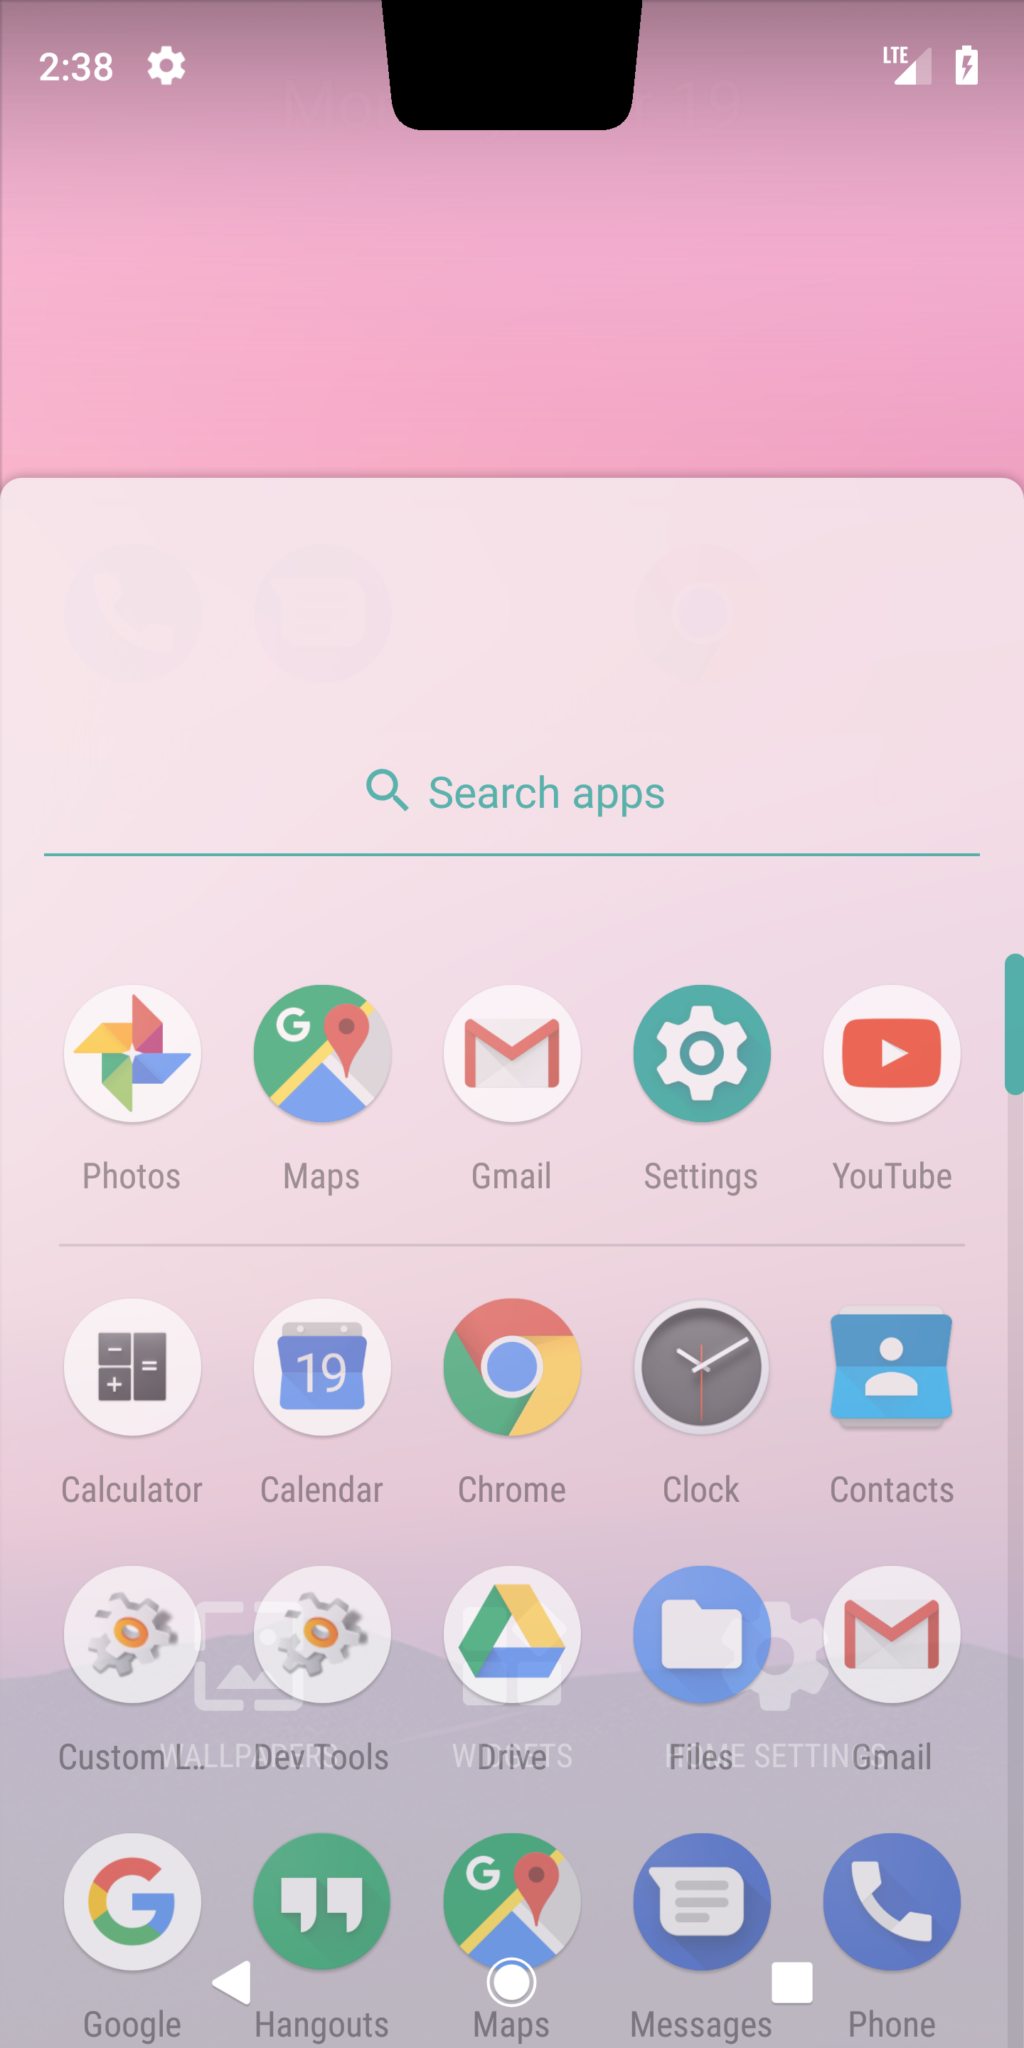 Android P Slide Up Menu